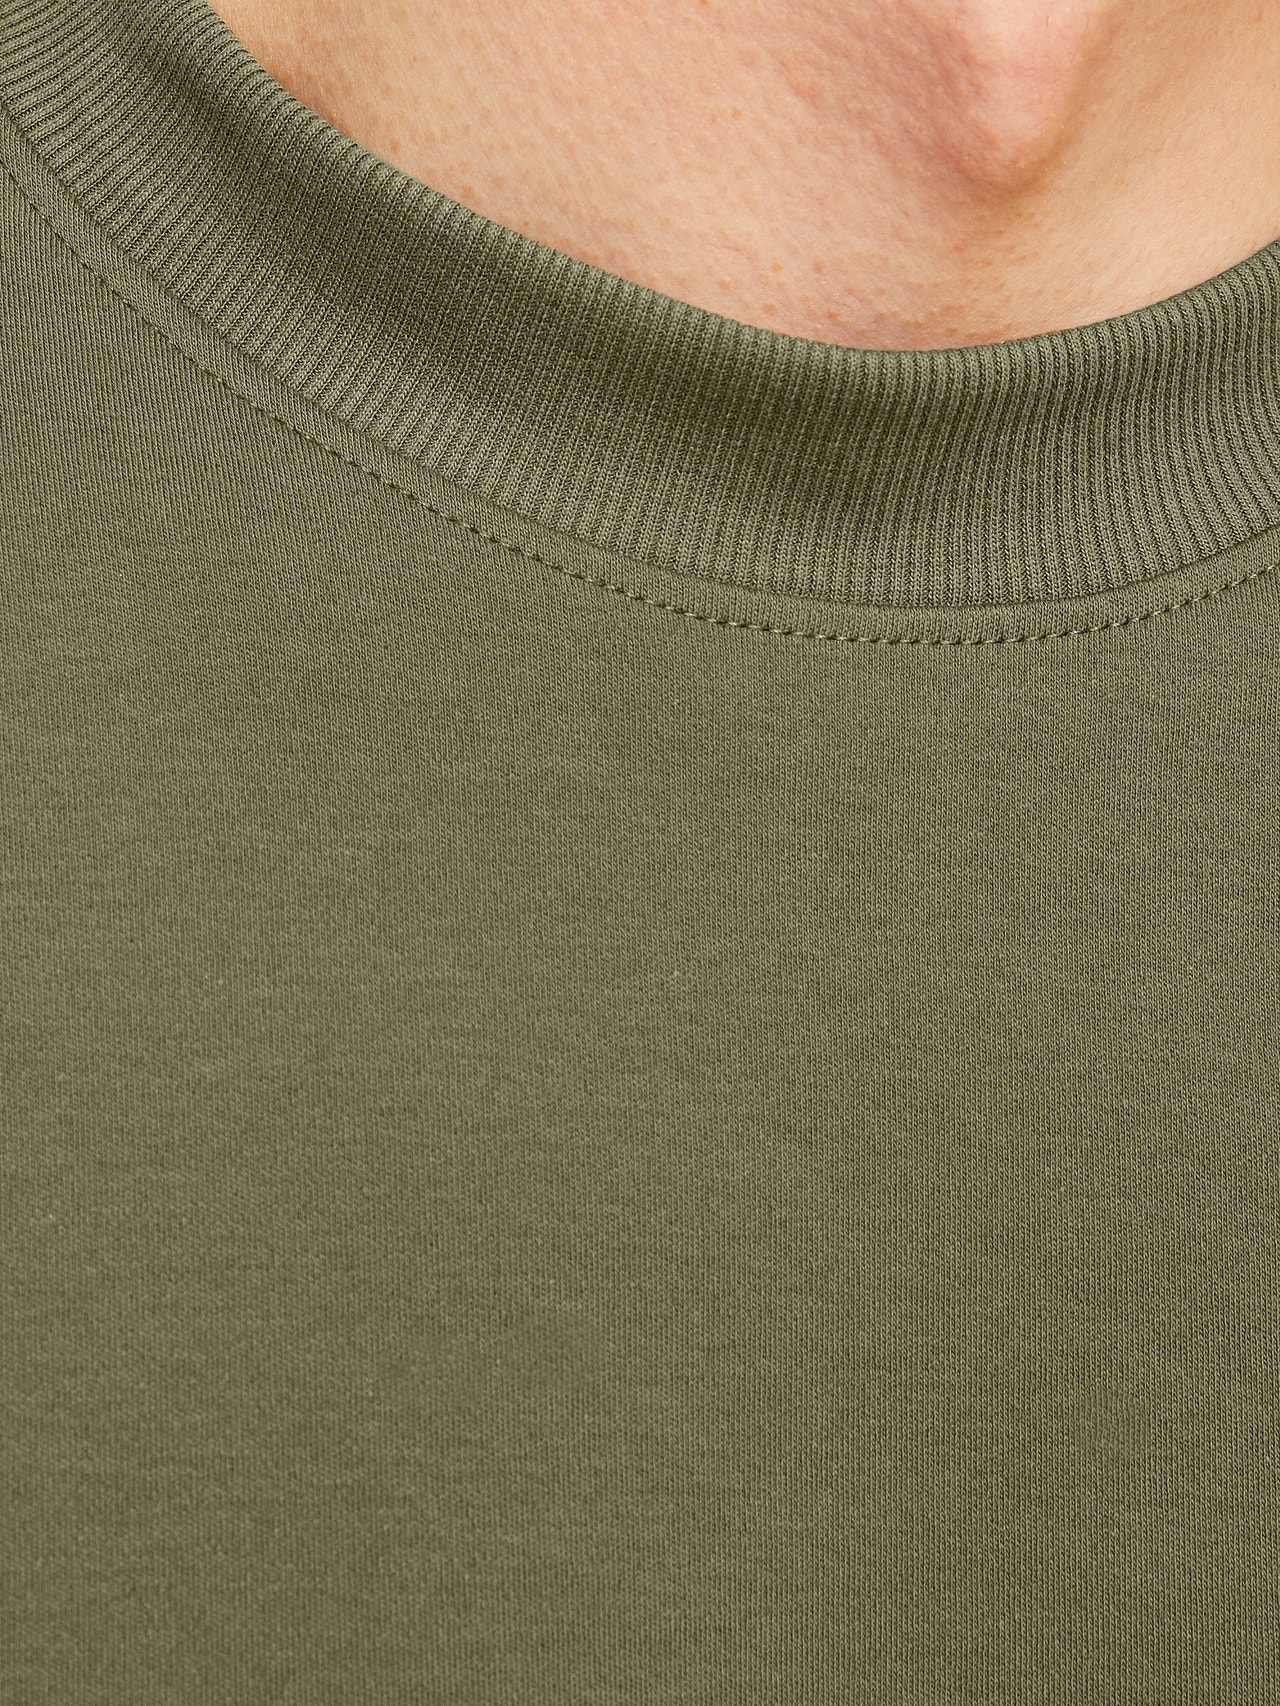 Jack & Jones T-shirt Estampar Decote Redondo -Sea Turtle - 12259357